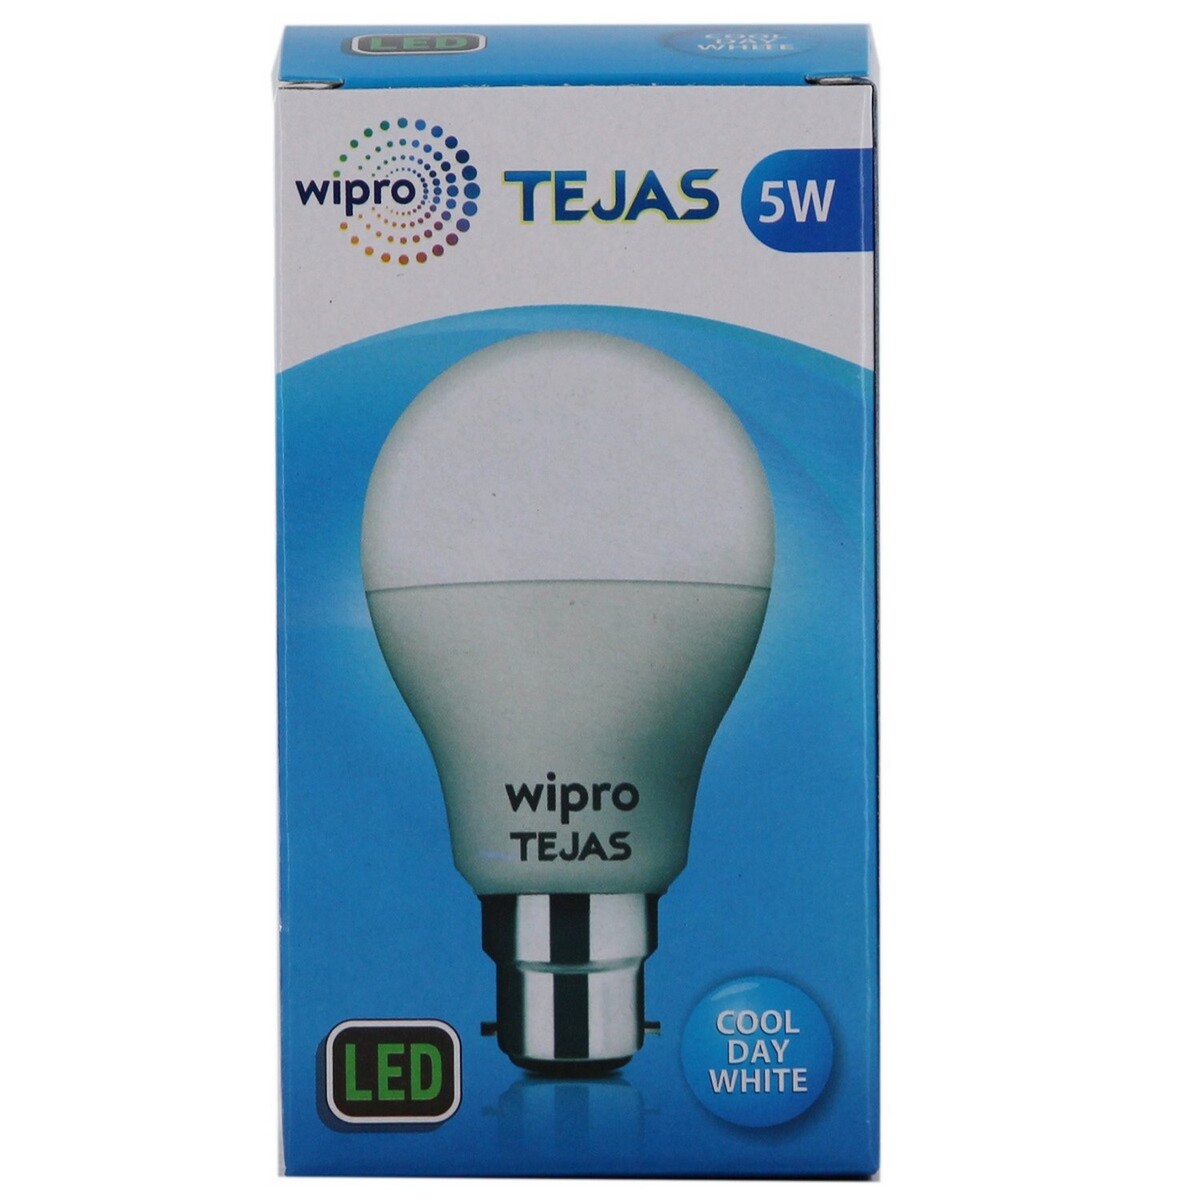 Wipro LED Bulb Tejas 5W